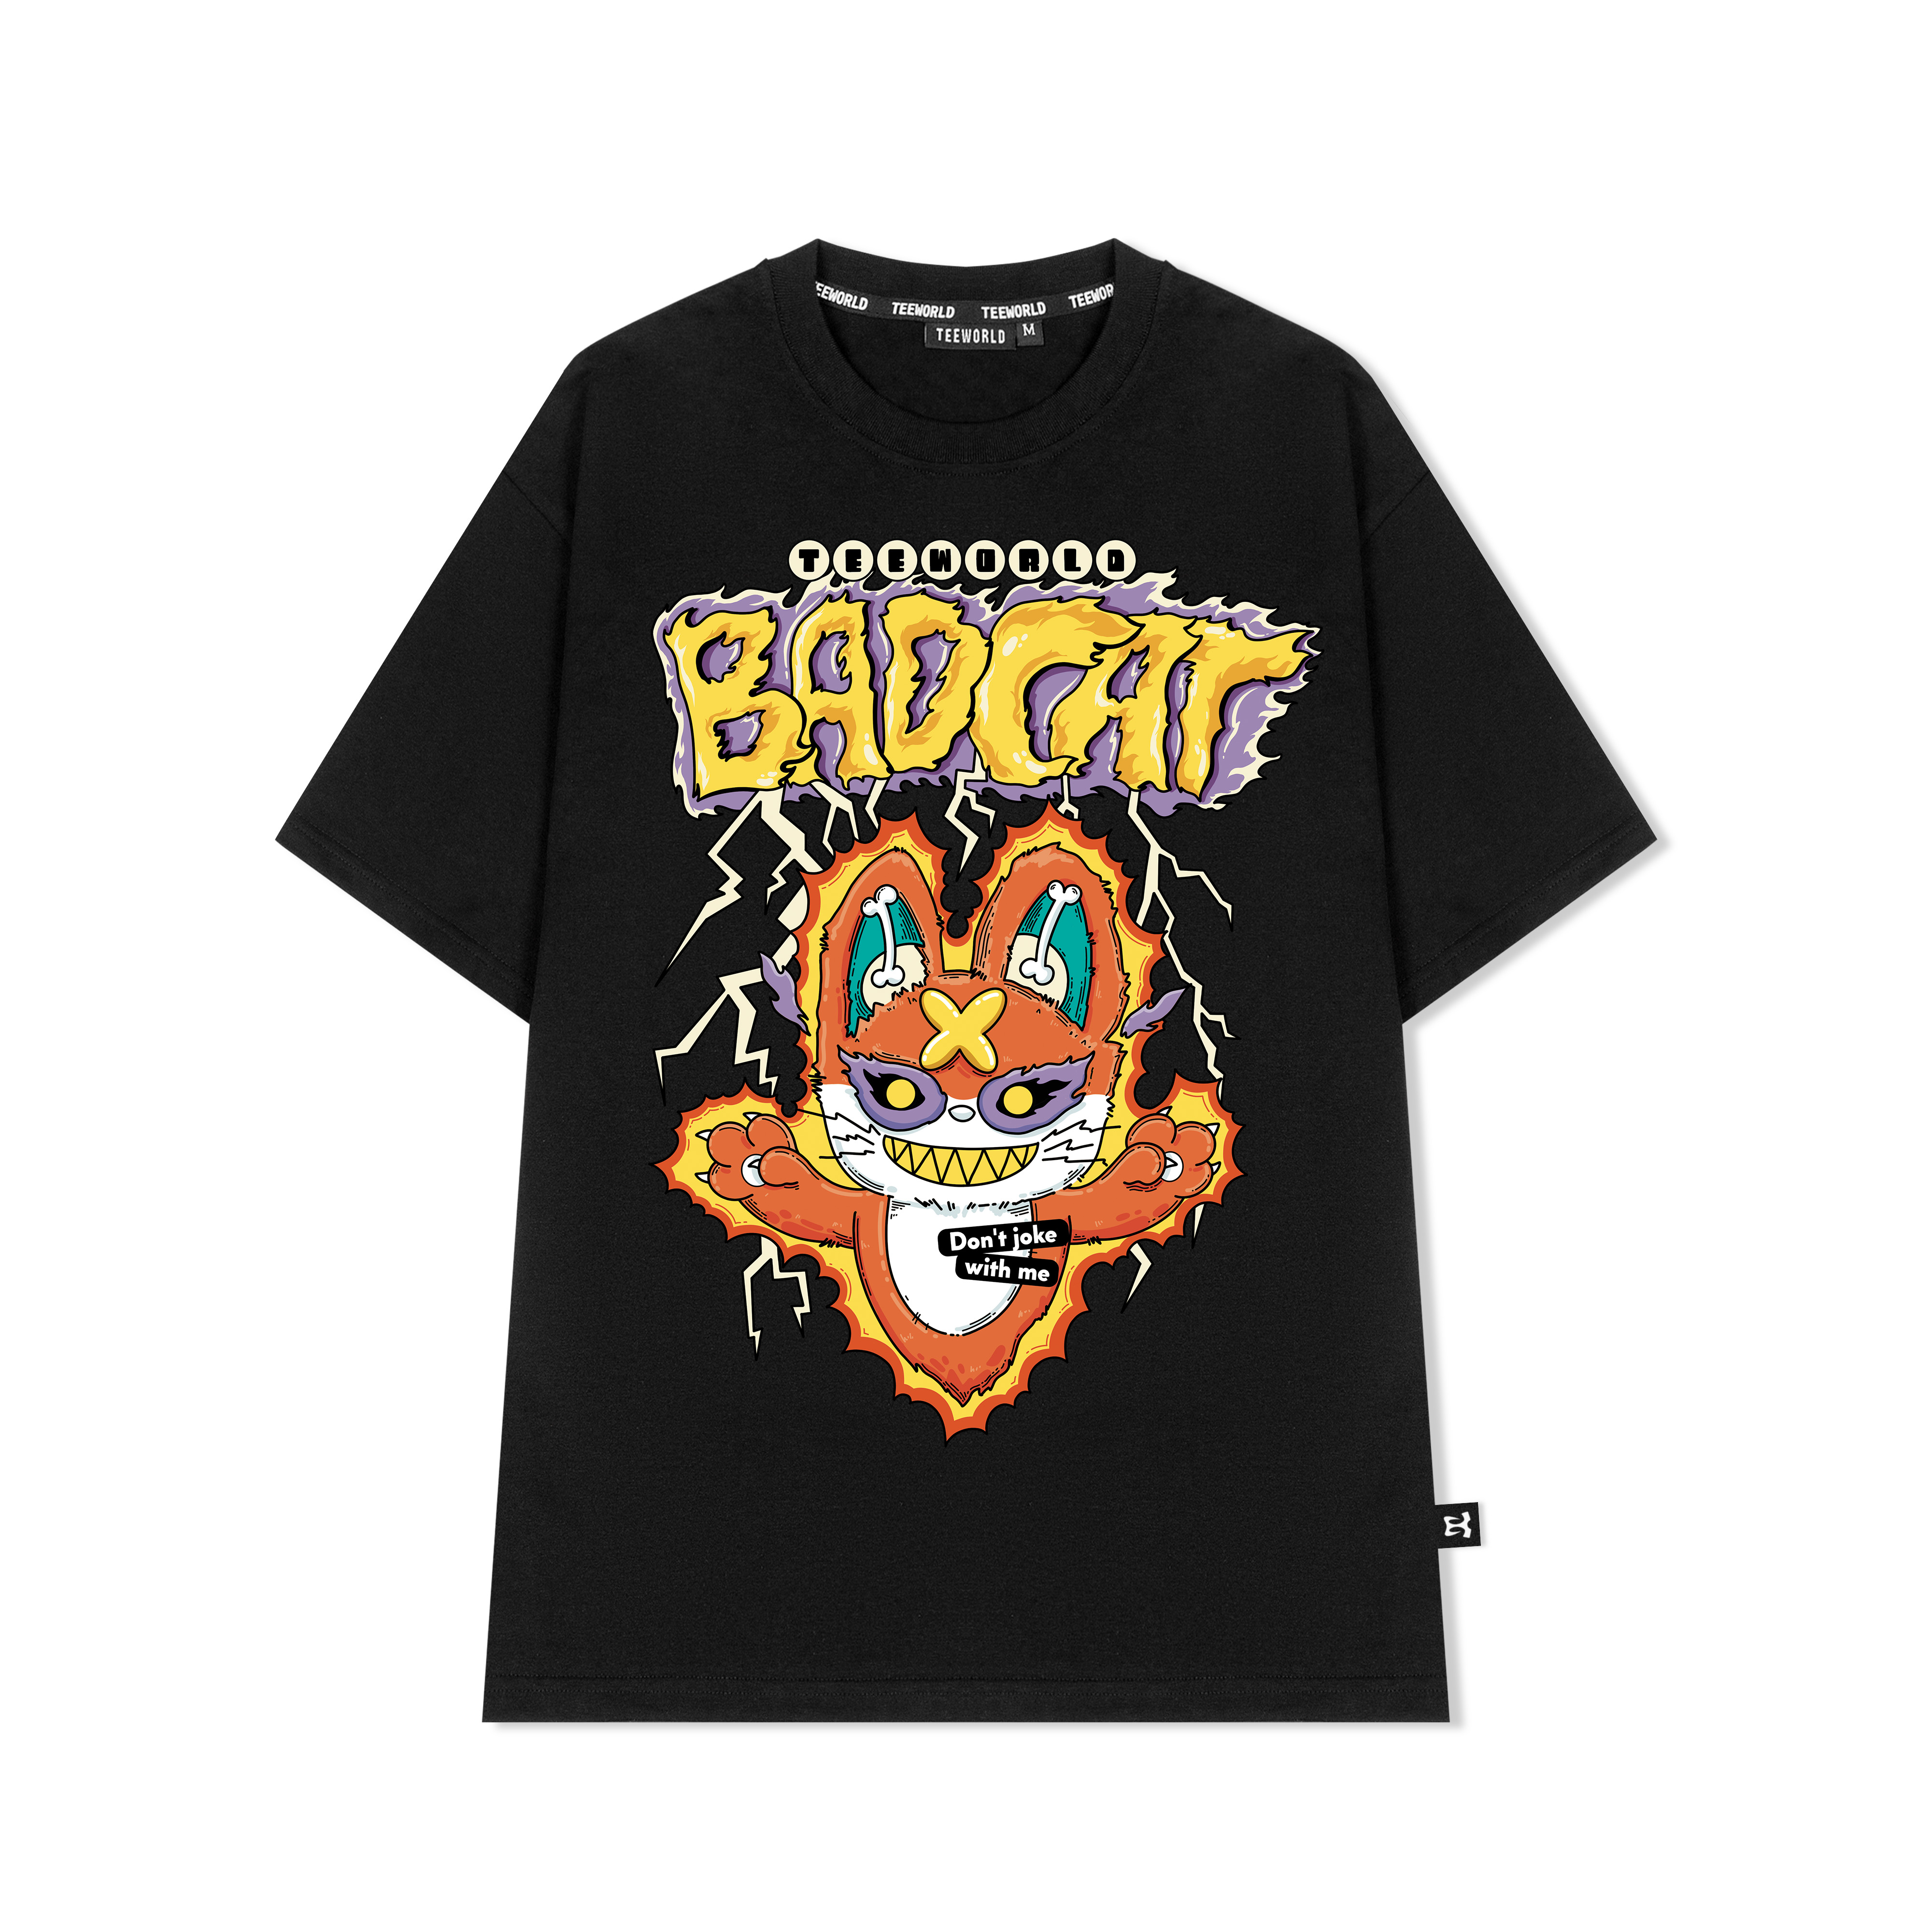 Áo thun Teeworld Bad Cat Thunder - TW Zoo Collection T-Shirt Nam Nữ Form Rộng Unisex